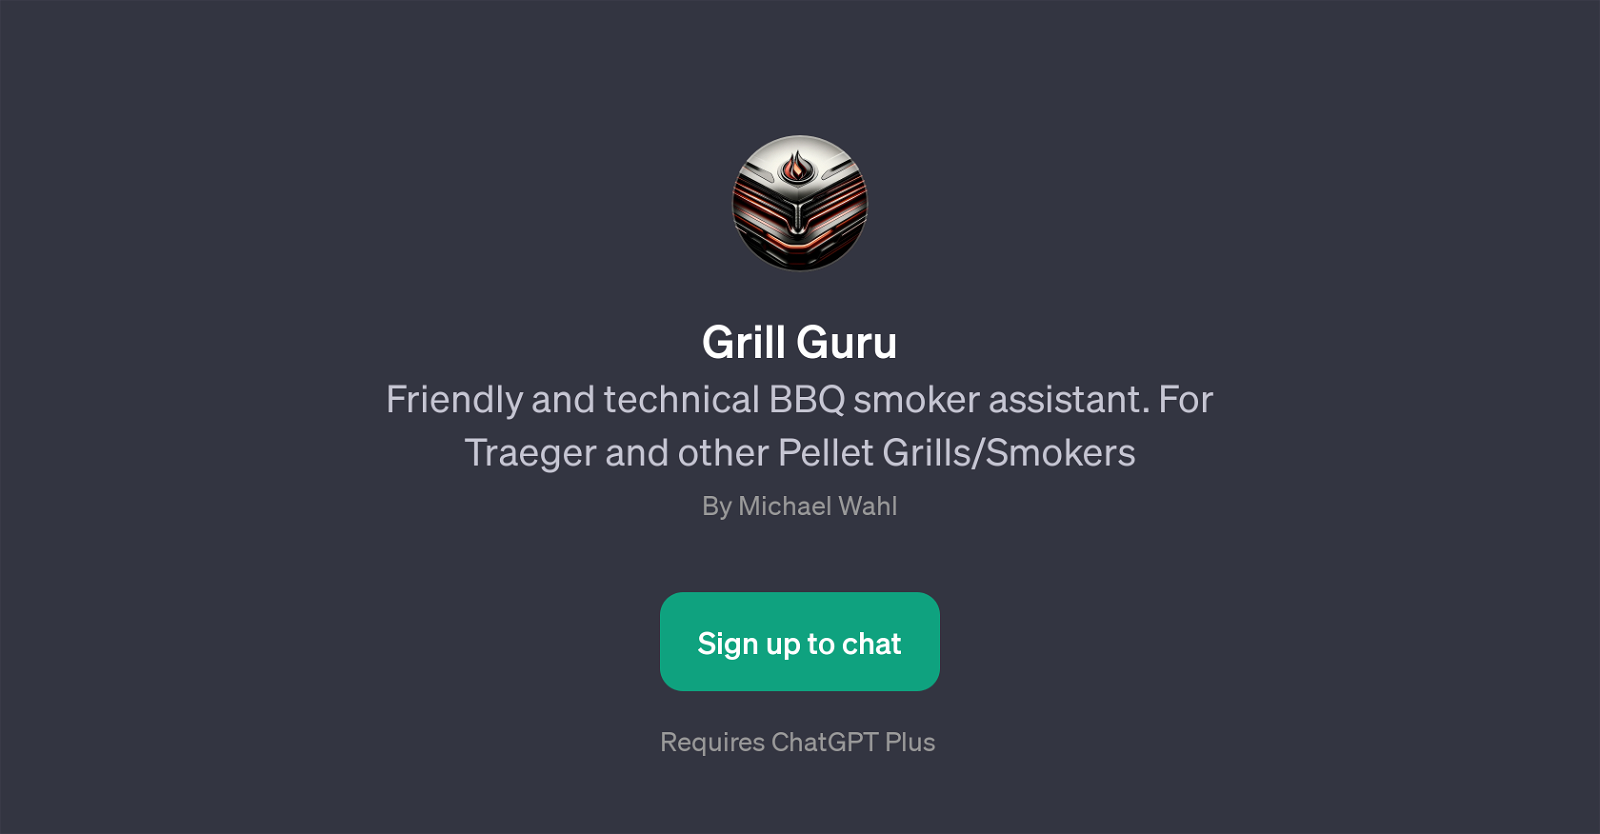 Grill Guru website